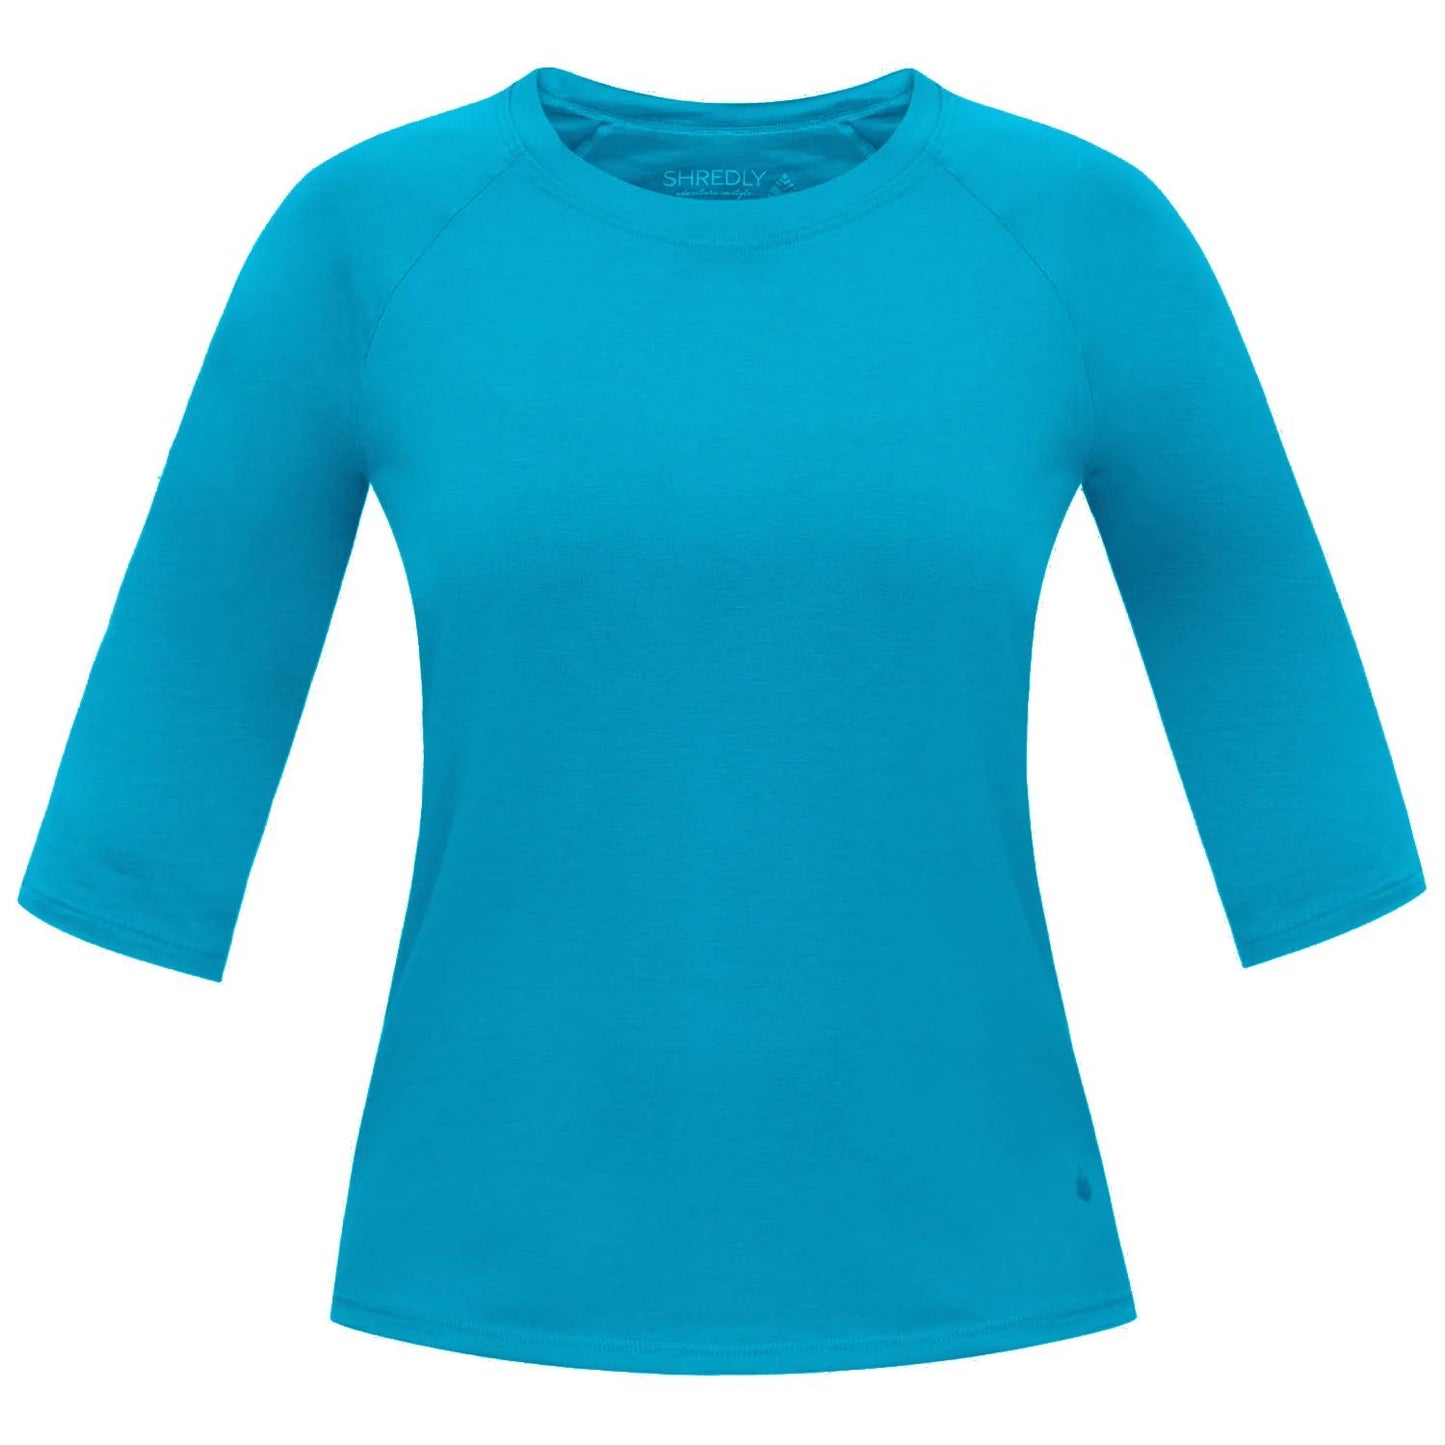 Shredly Women's Raglan 3/4 Tee Electric Blue LS Shirts